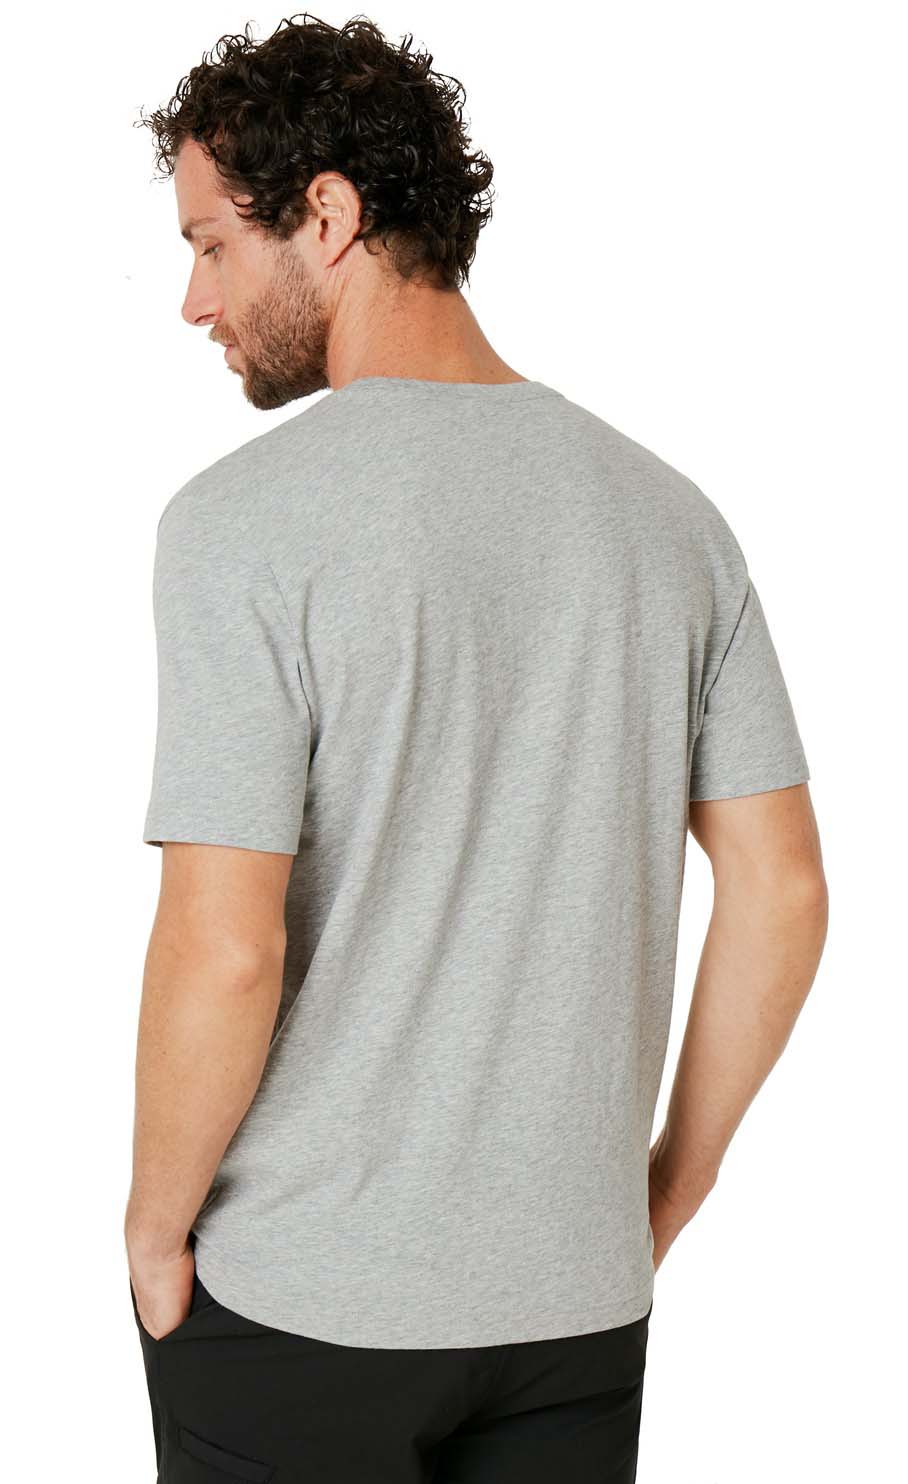 Oakley Tridimensional Short Sleeve T-Shirt